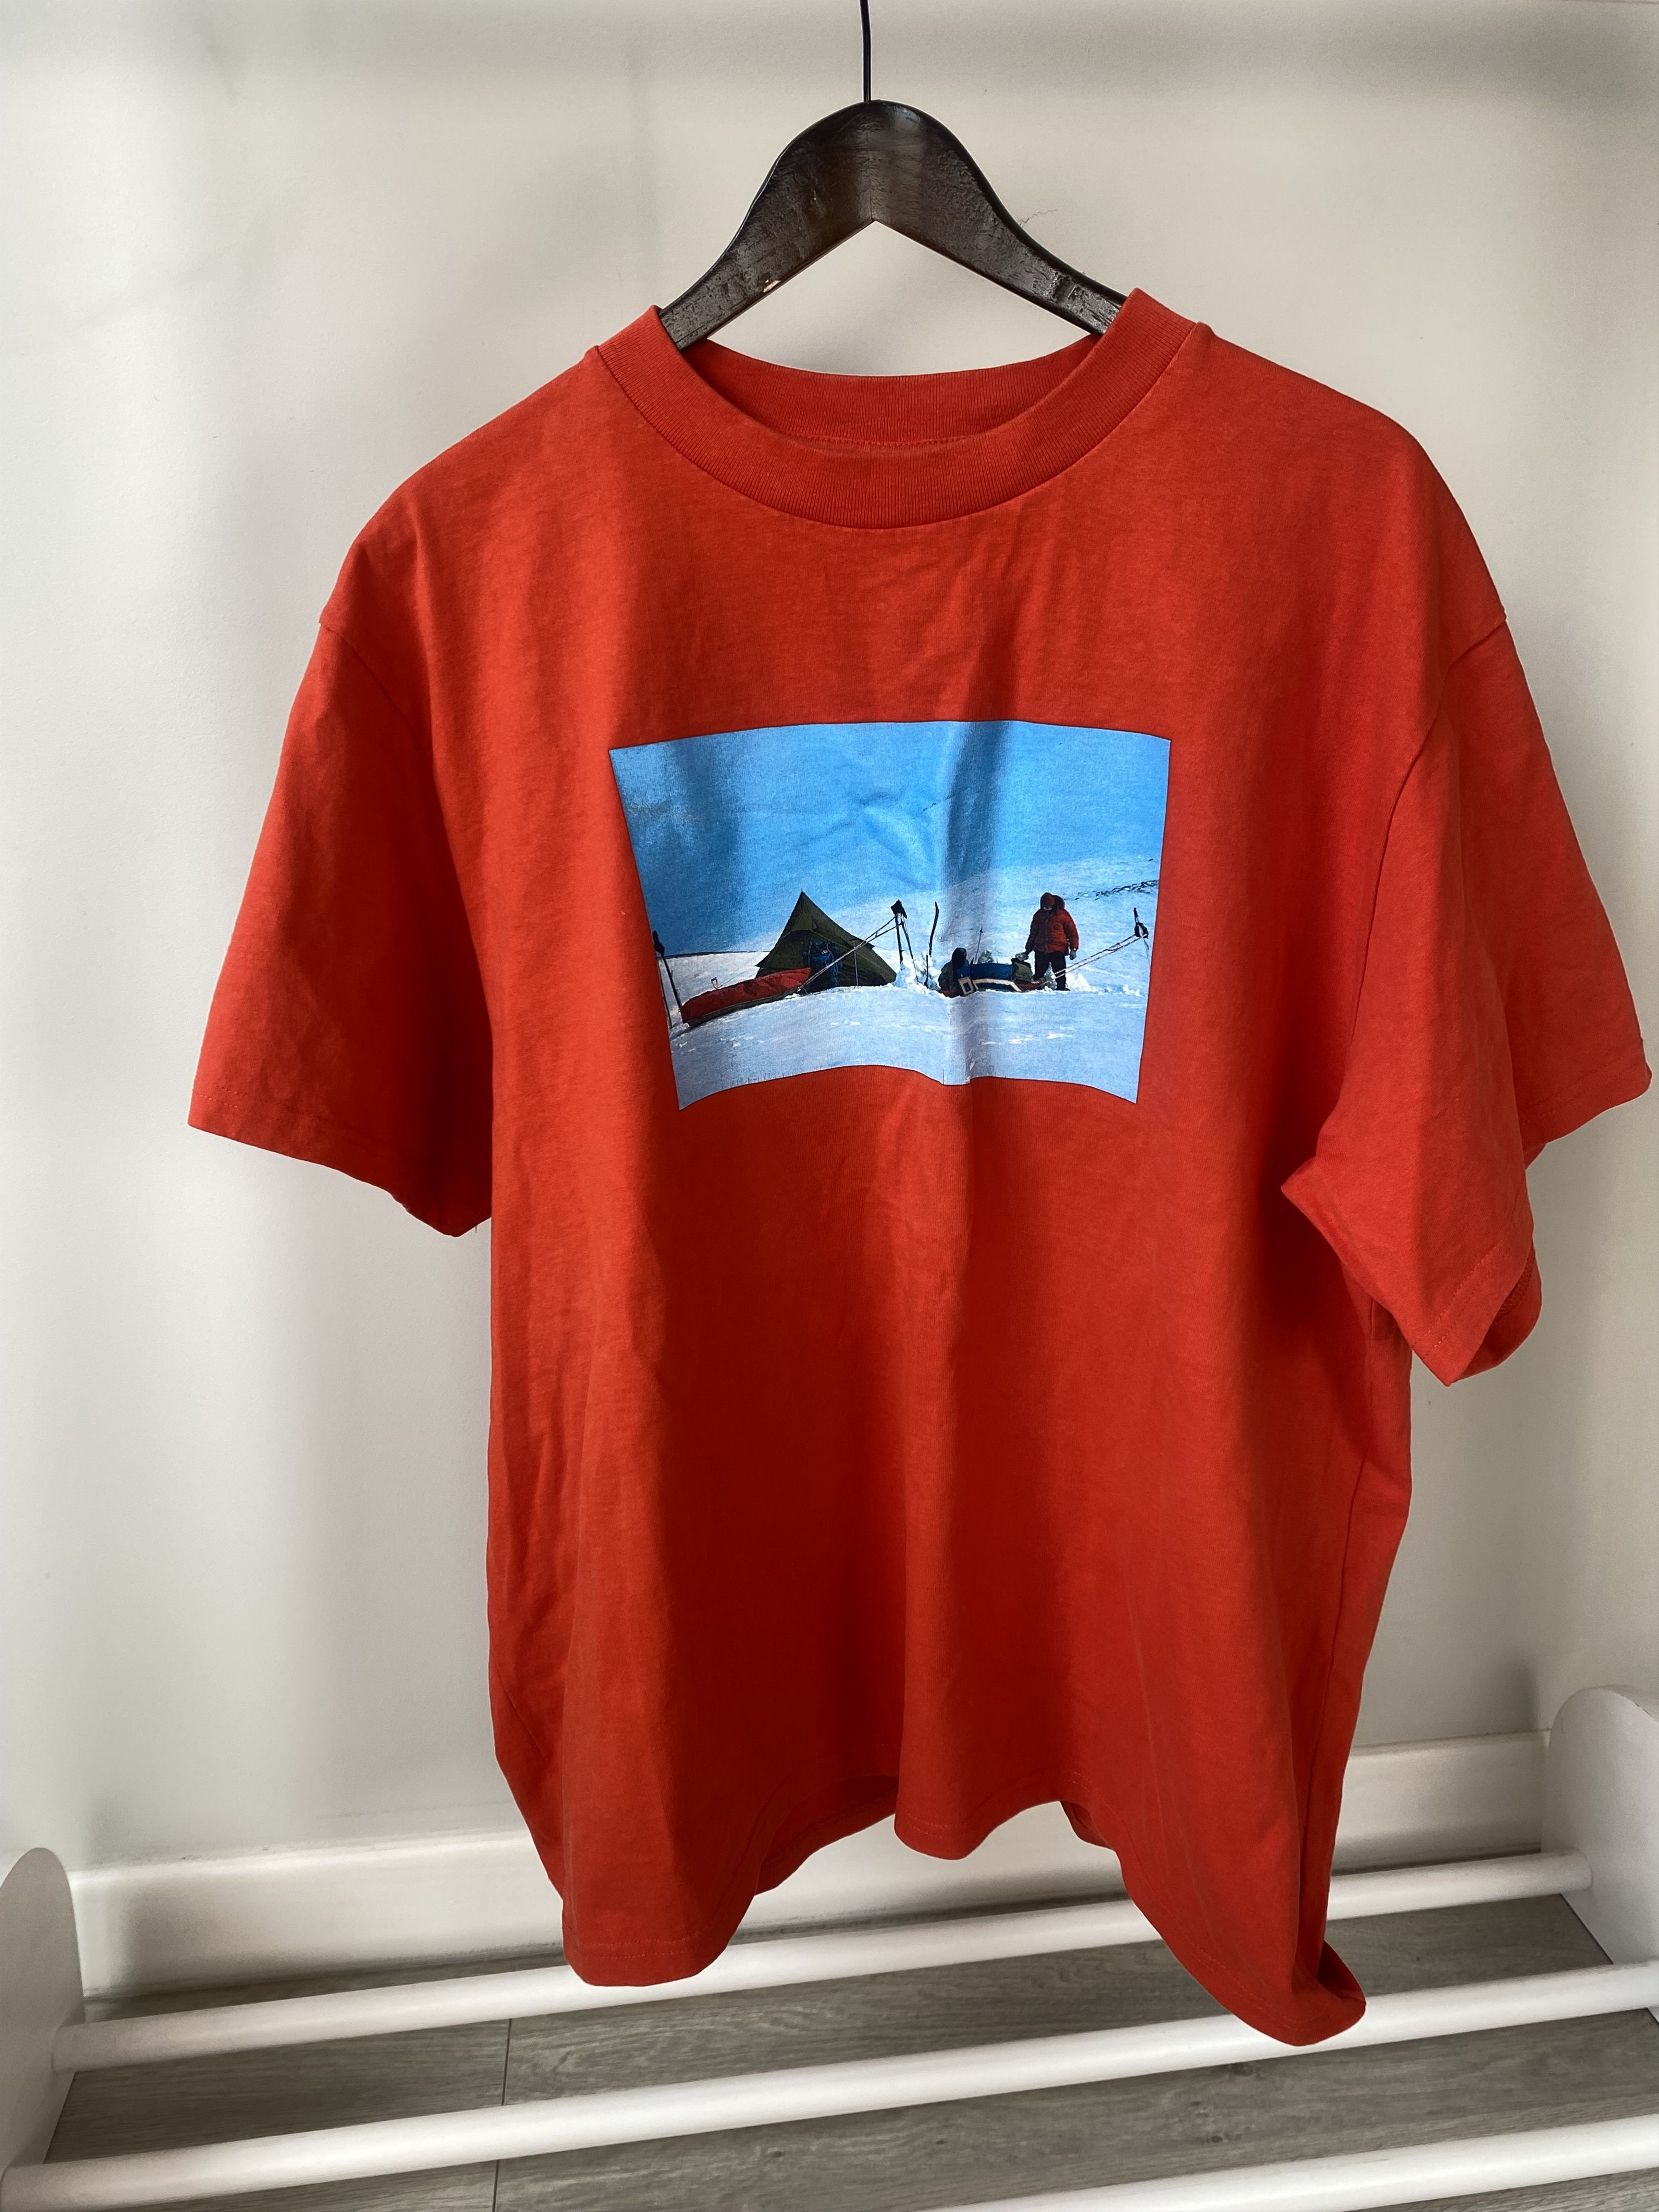 Acne Studios Acne Studios x Fjällräven Rare Print T Shirt | Grailed